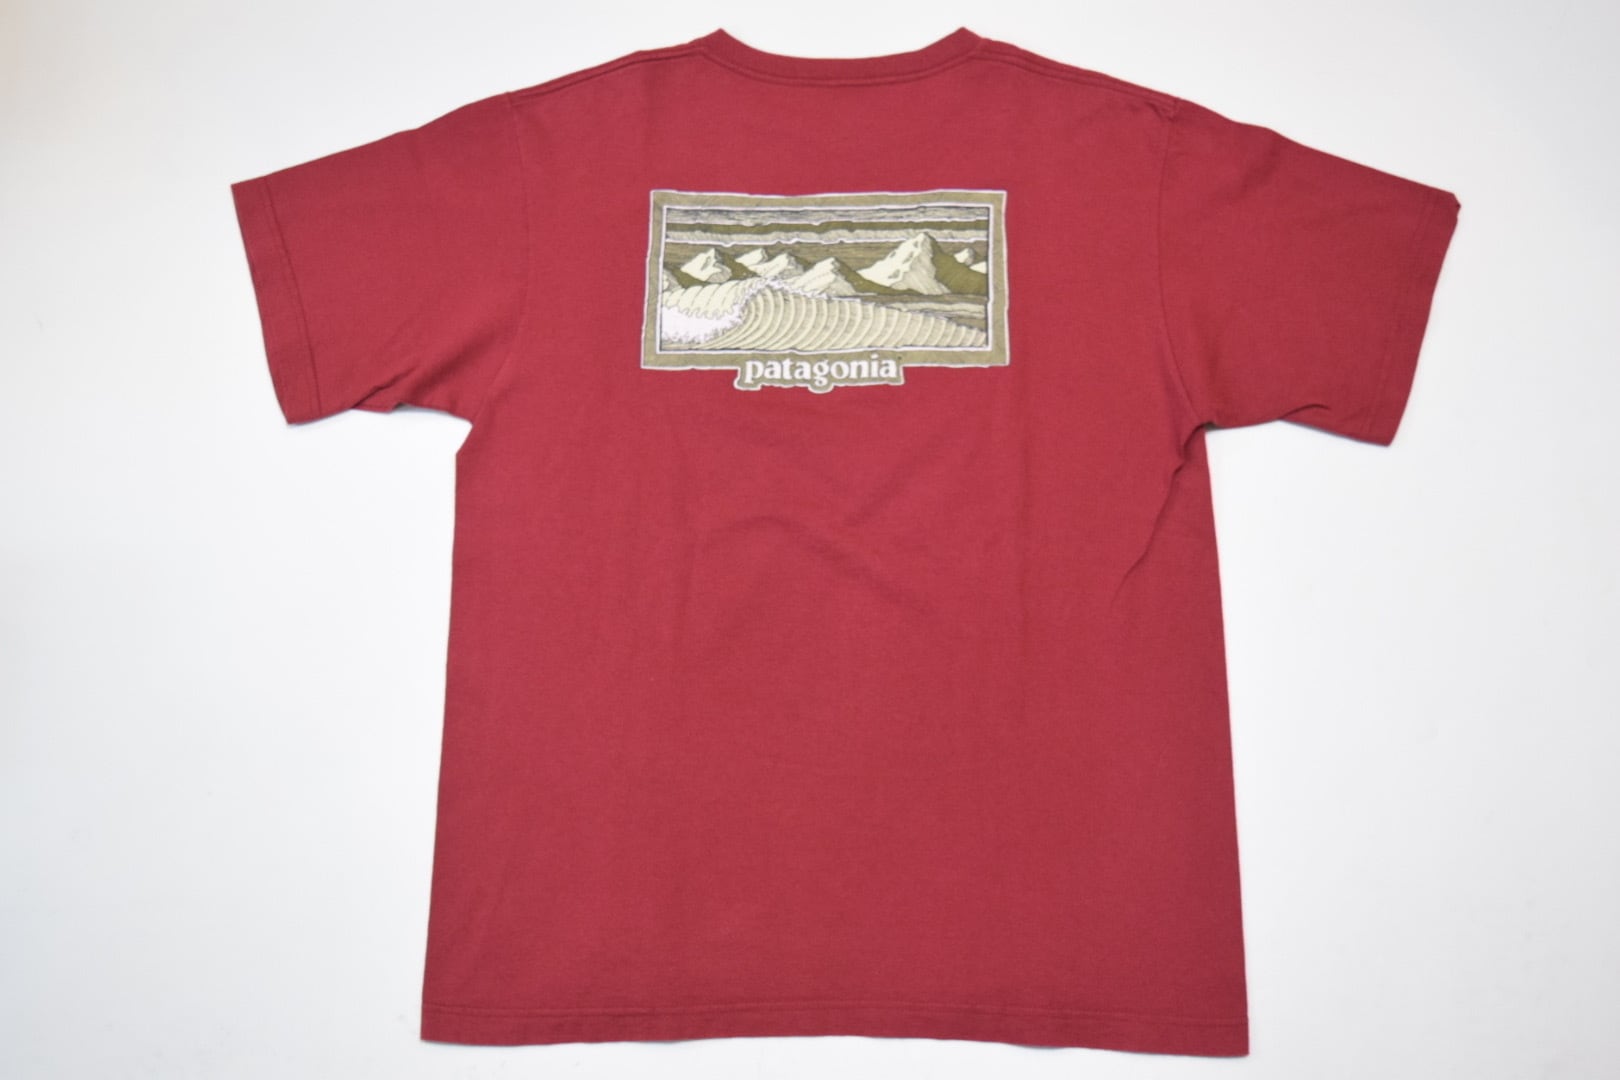 USED 90s patagonia T-shirt -Medium 01568